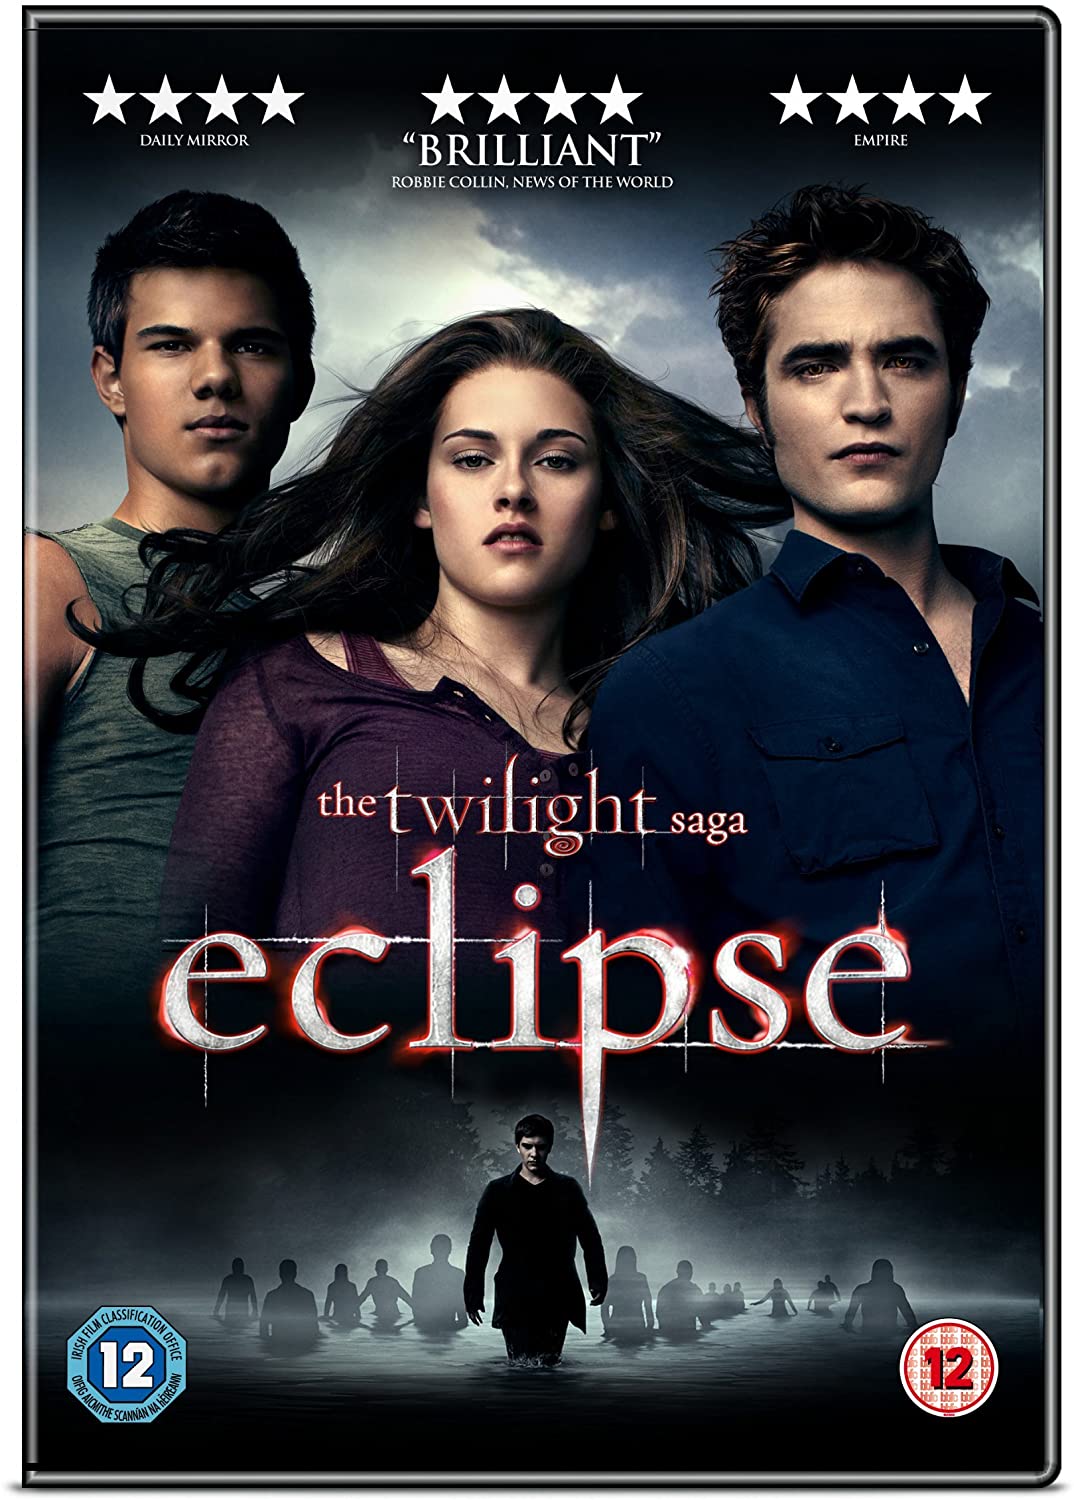 The Twilight Saga: Eclipse [2017] - Romance/Fantasy [DVD]